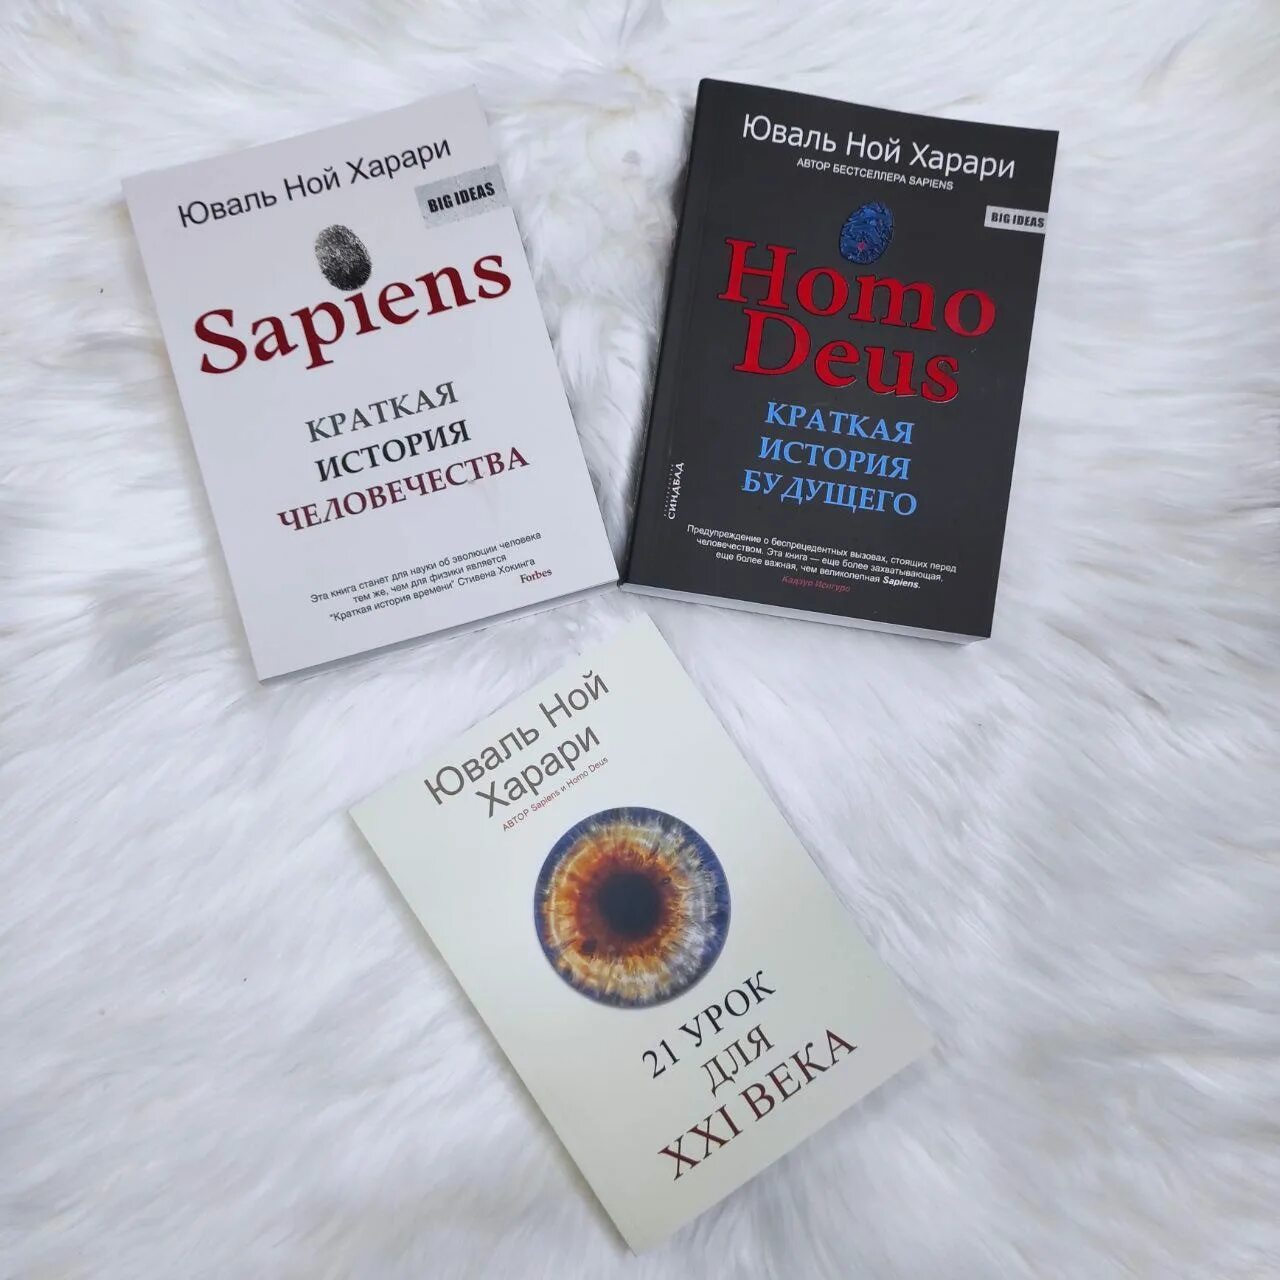 Харари 21 урок для 21 века. Книга 21 урок для 21 века. Sapiens краткая. Homo Deus книга. Sapience book.